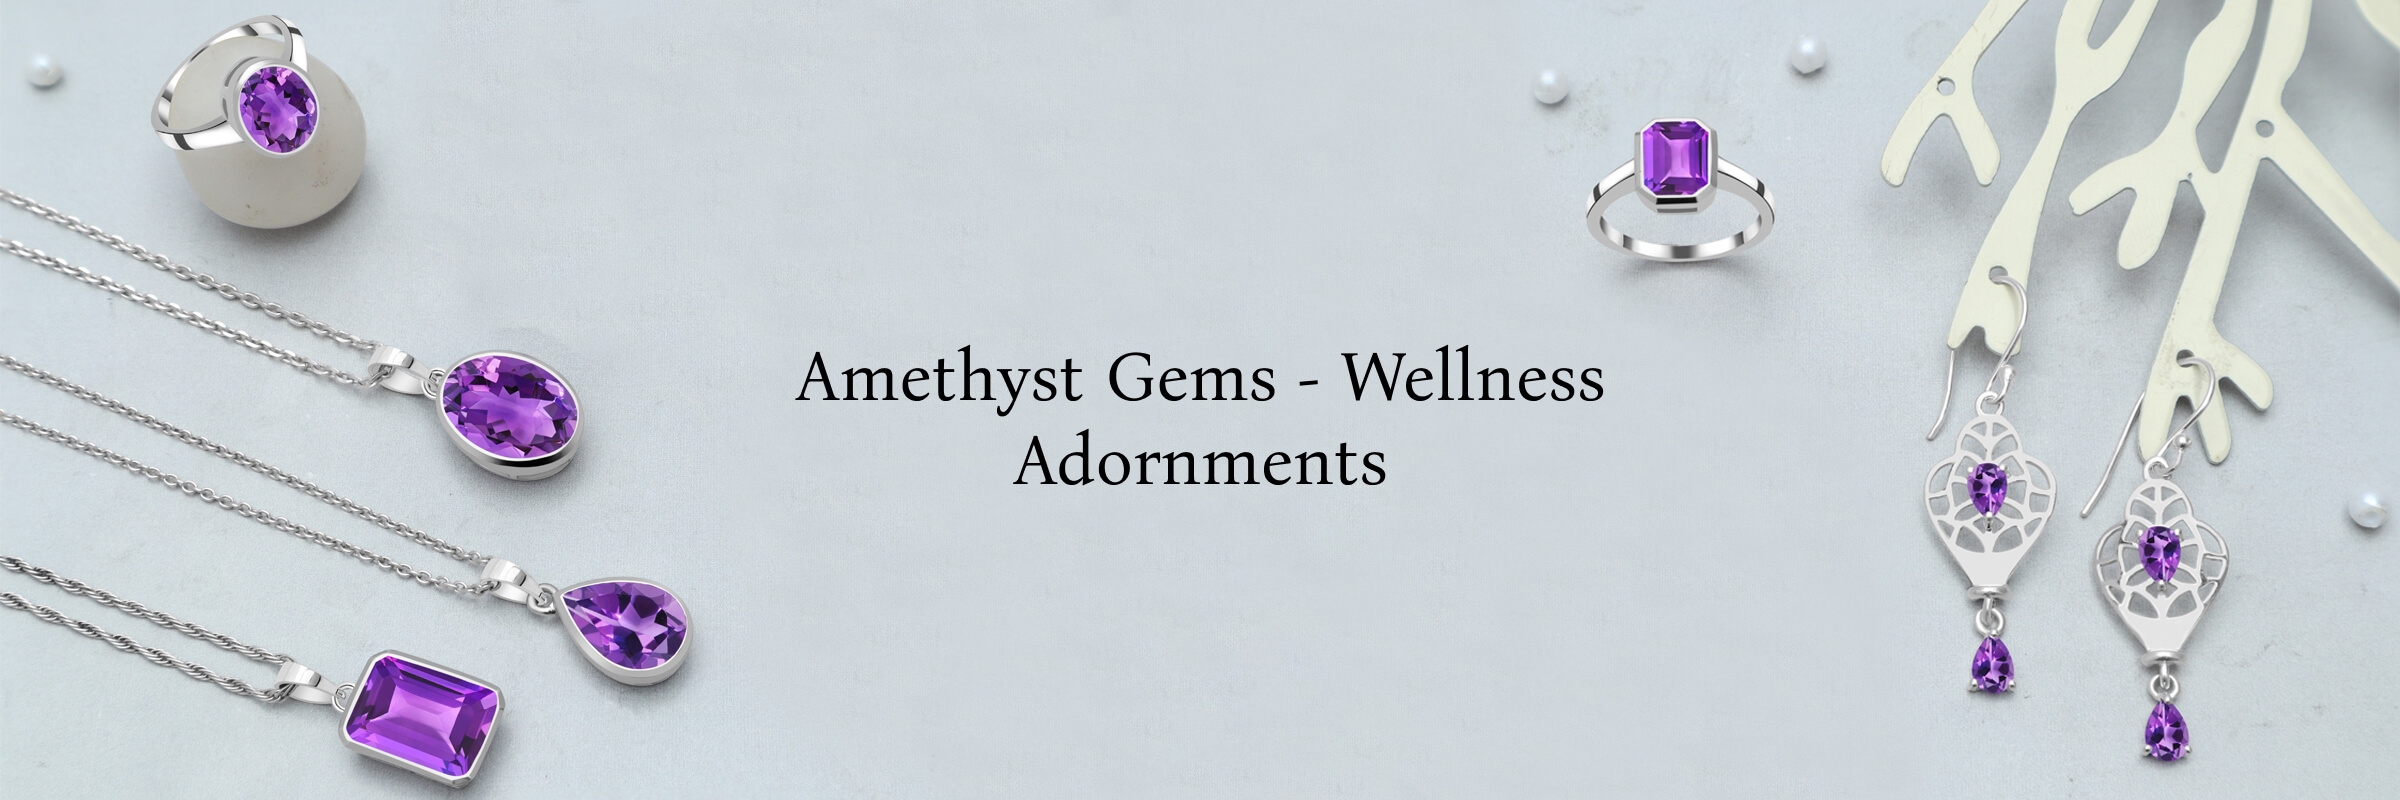 AMETHYST STONE | Amethyst Stone (KATELA) Price and benefits | Origin of  Amethyst | 2021 - YouTube